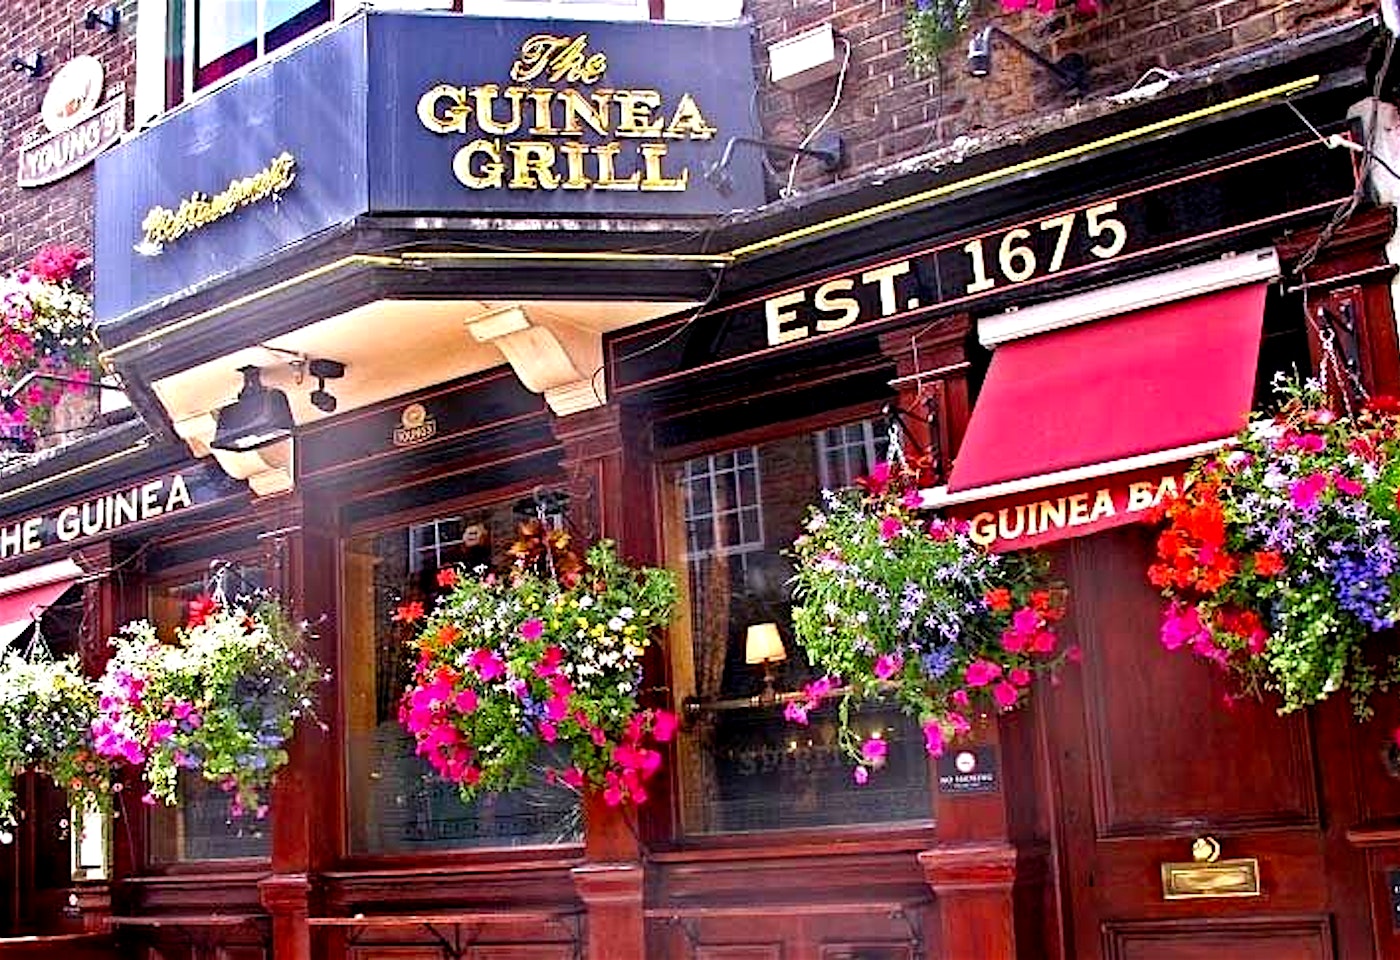 The Guinea Mayfair pubs 1